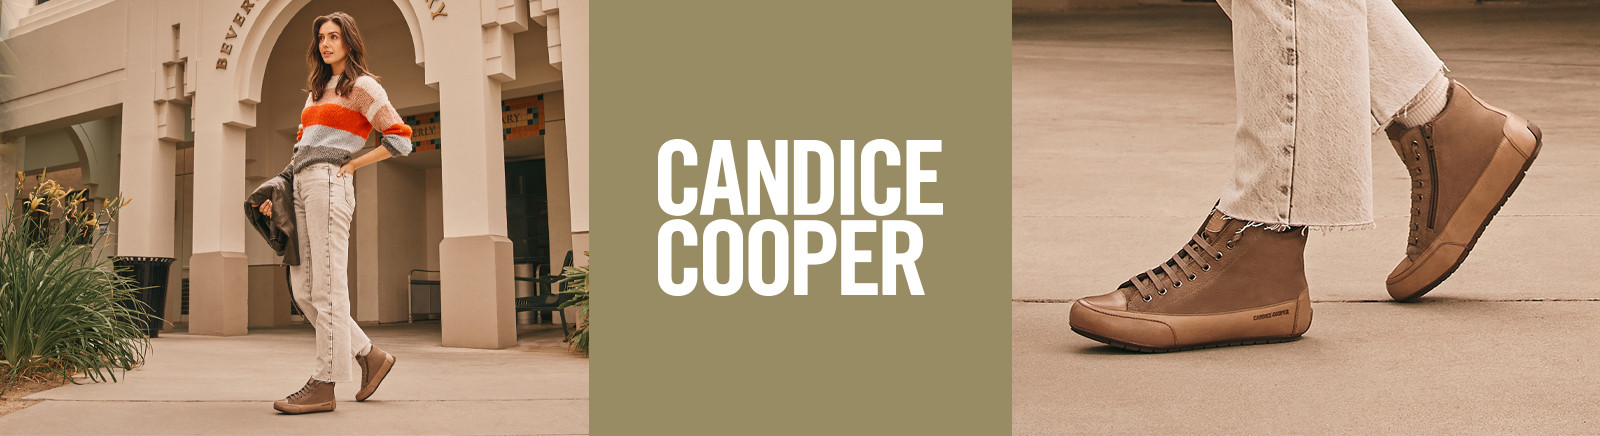 Juppen: Candice Cooper Winterboots für Damen online shoppen